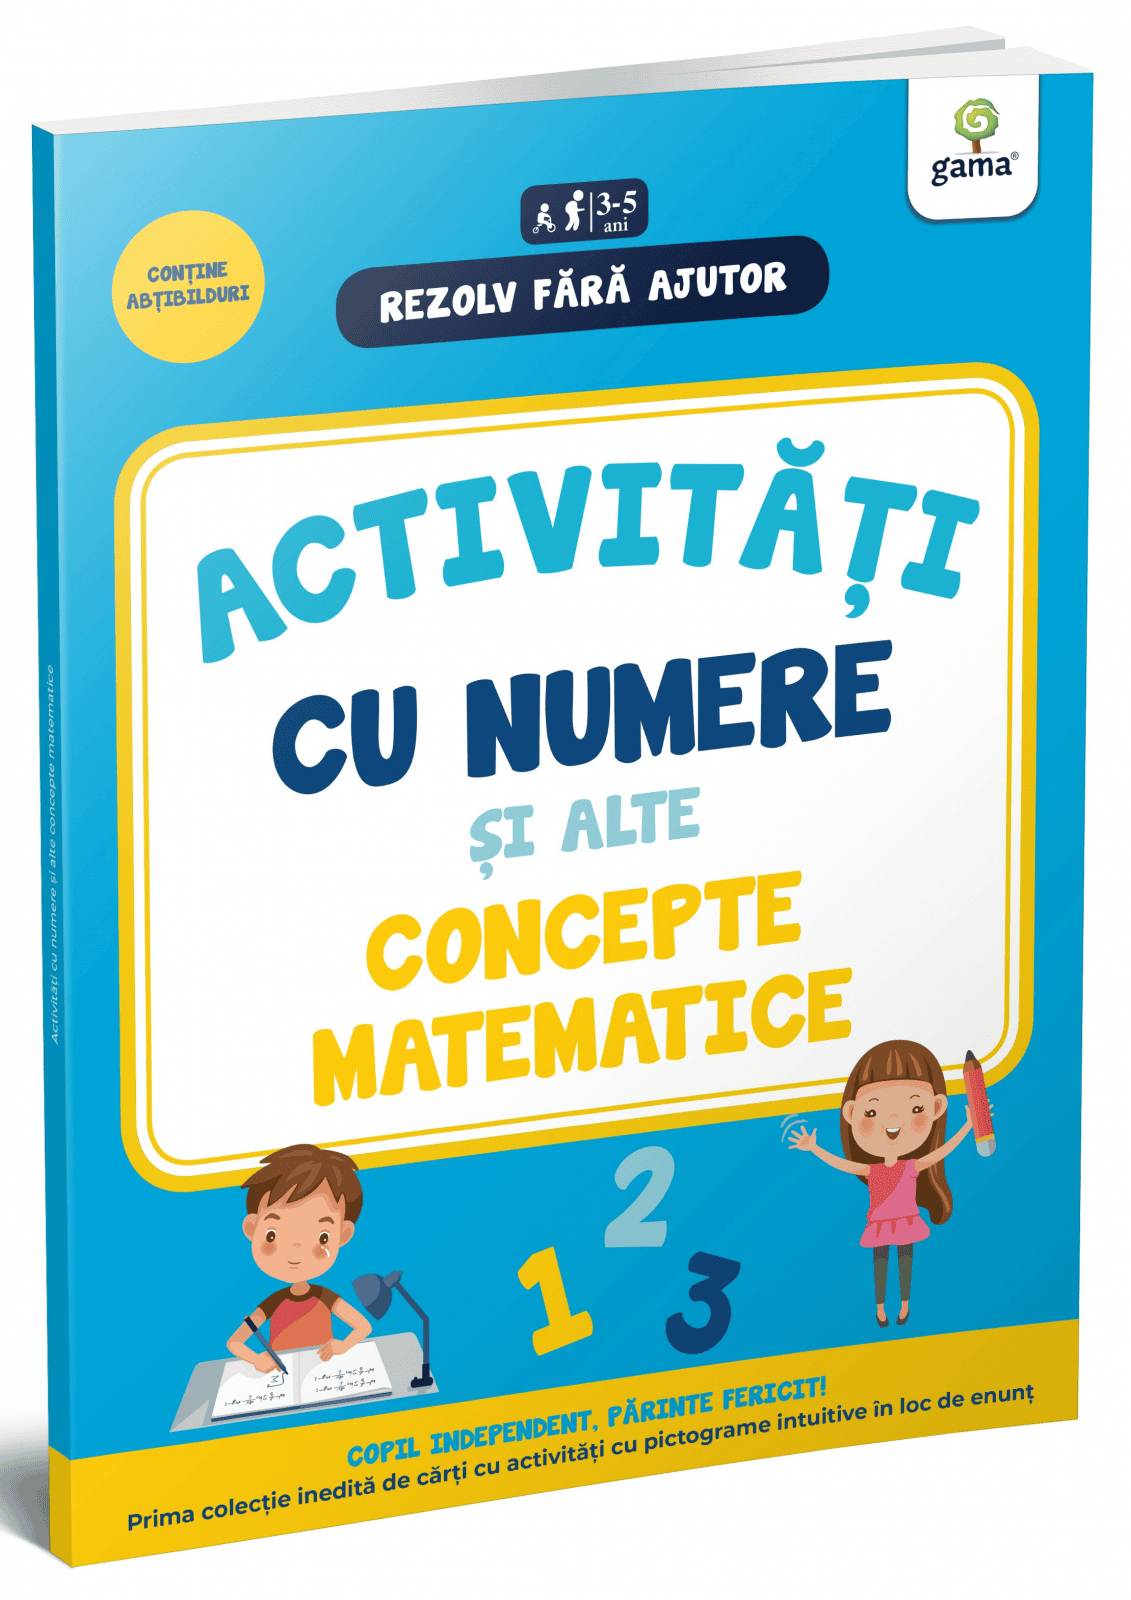 Activitati cu numere si alte concepte matematice, Editura Gama, 2-3 ani +